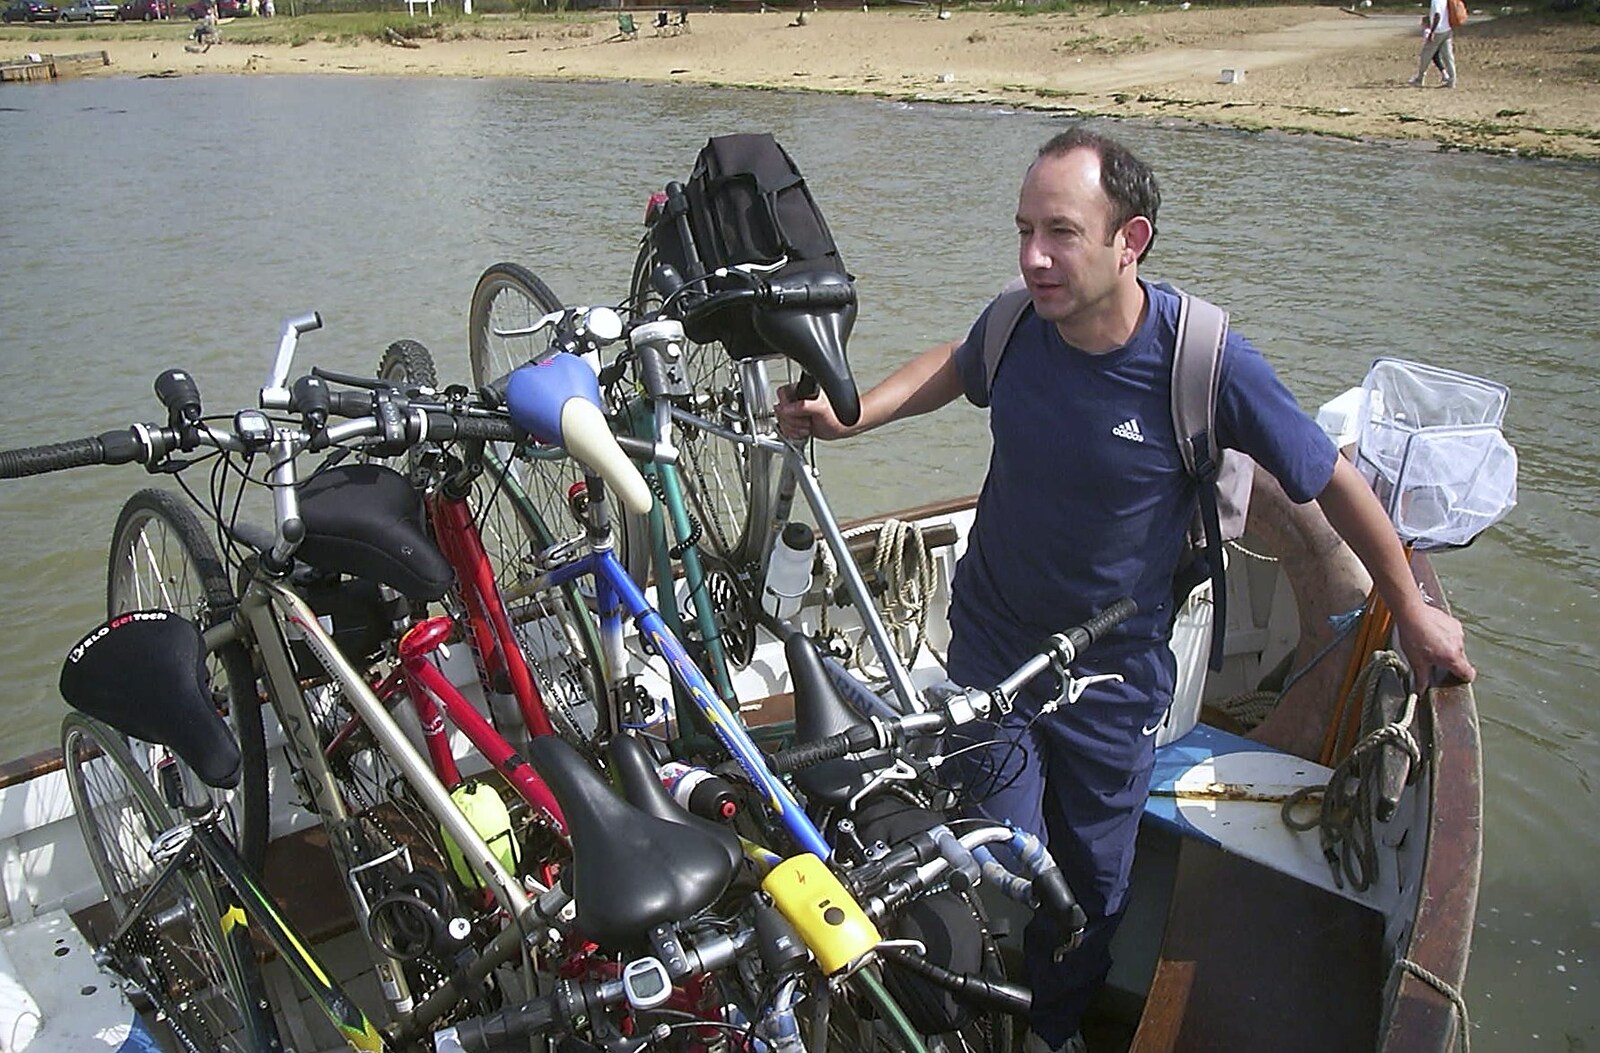 A BSCC Splinter Group Camping Trip, Shottisham, Suffolk - 13th August 2004: DH is stuck at the stern behind all the bikes